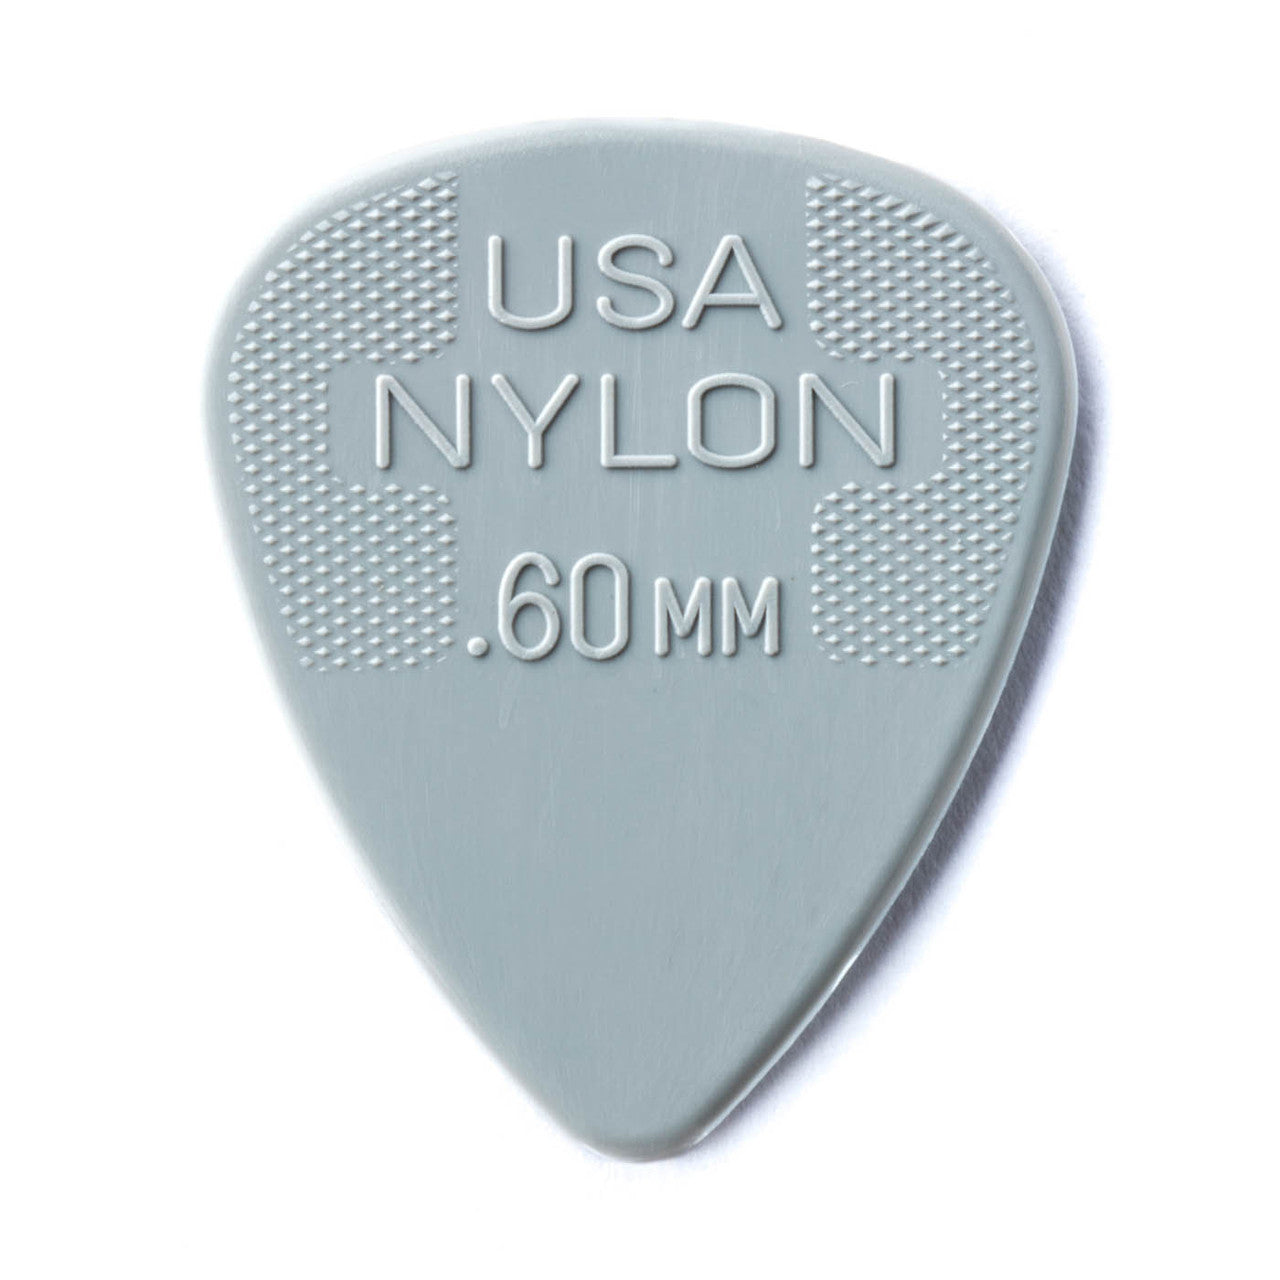 Dunlop Nylon Standard Pick .60mm